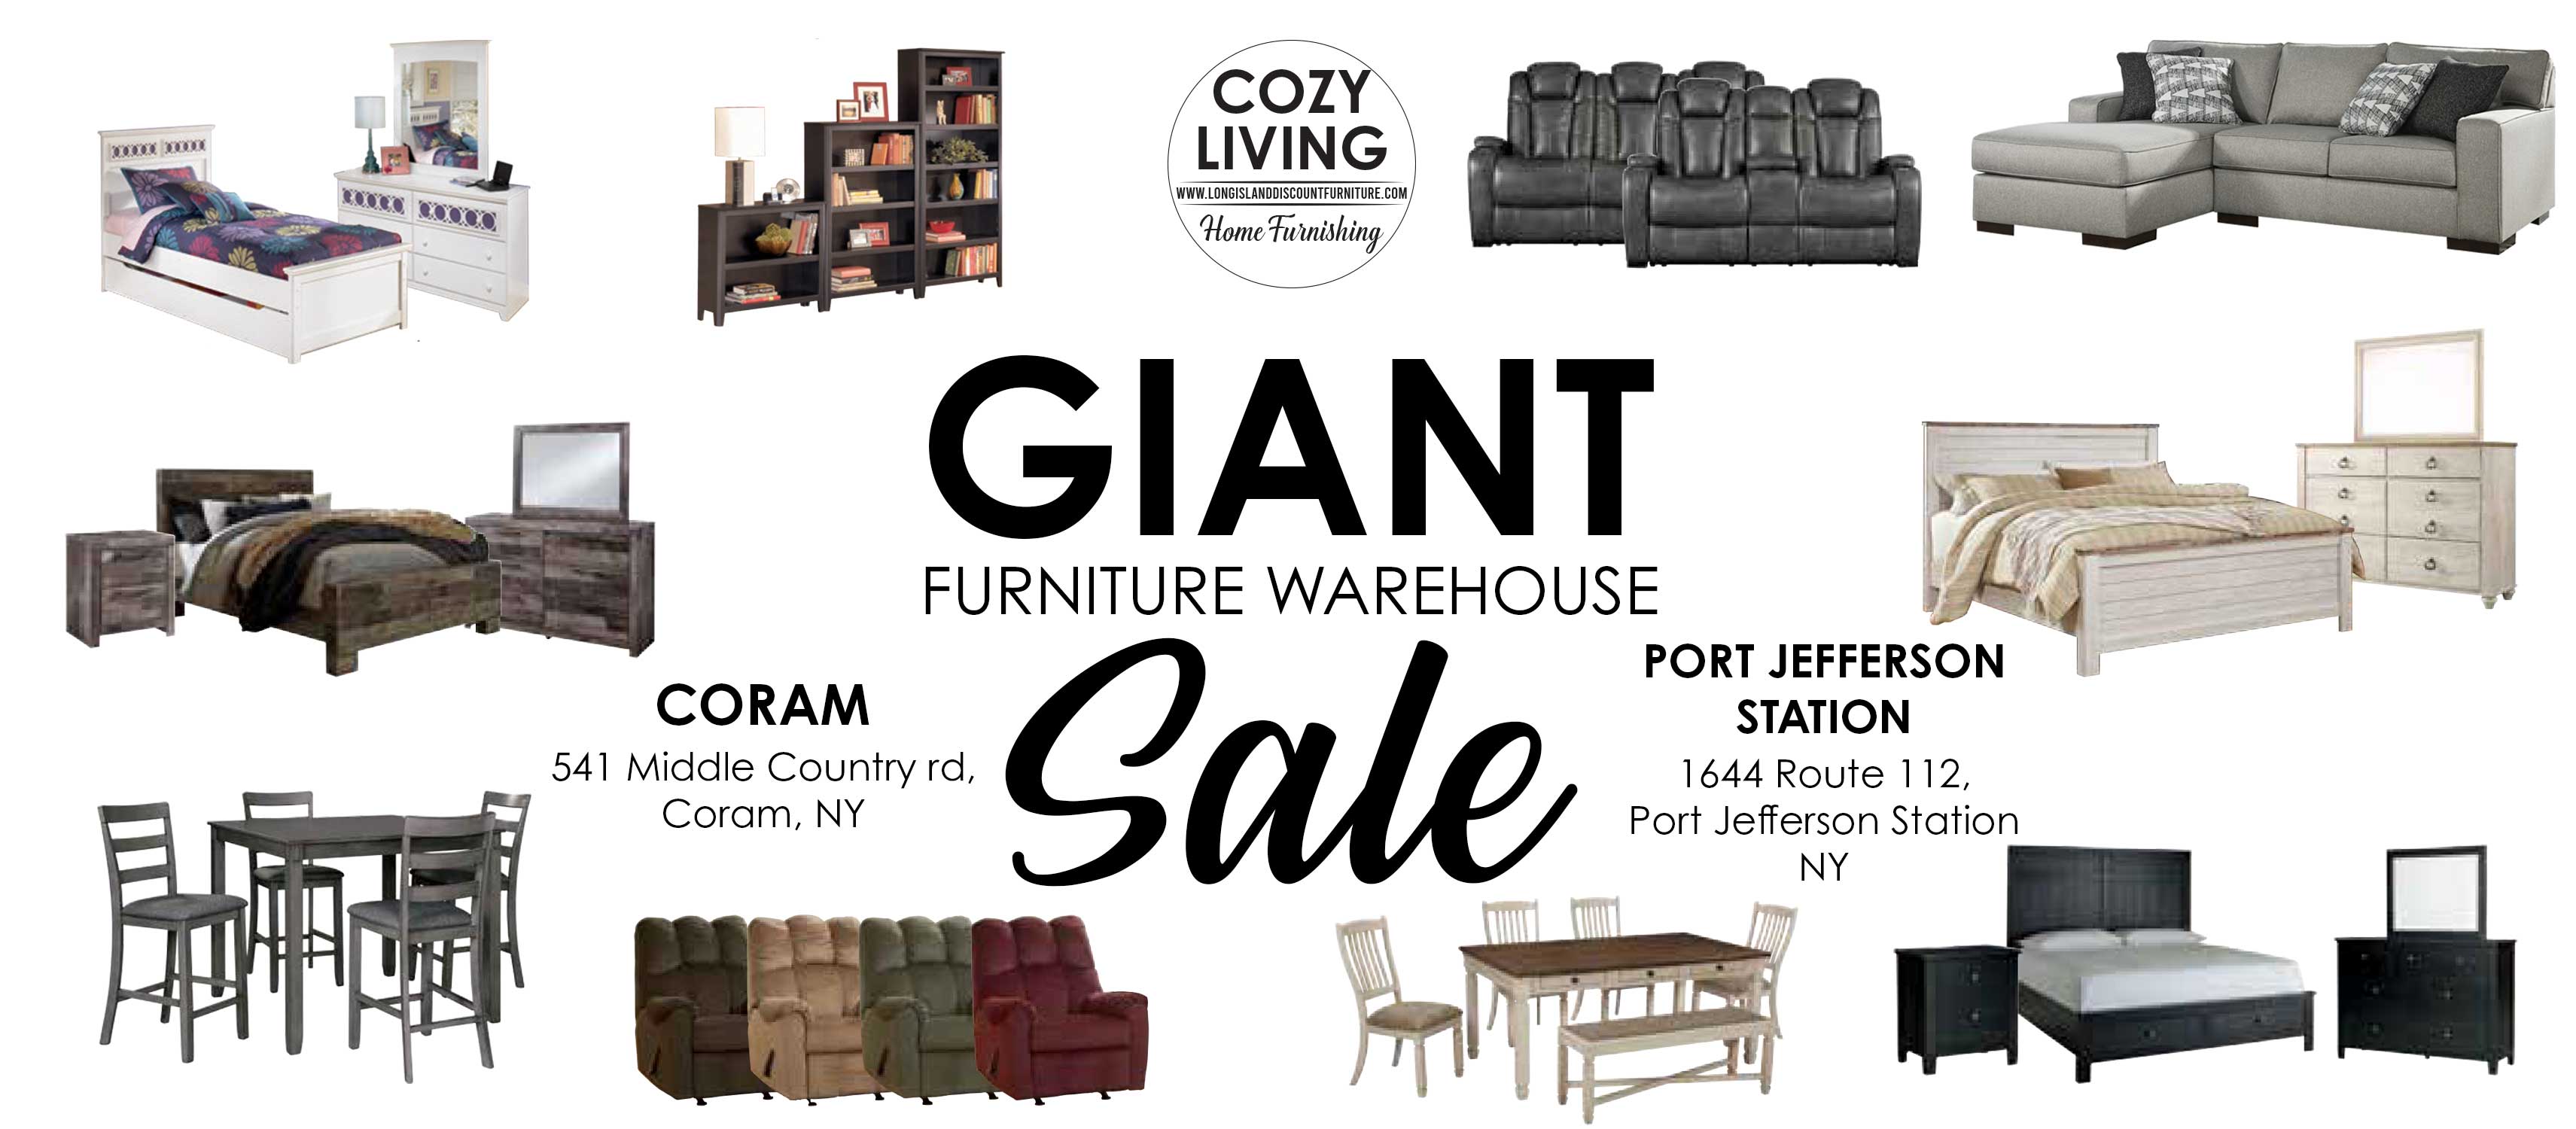 Giant Furniture Warehouse Sale